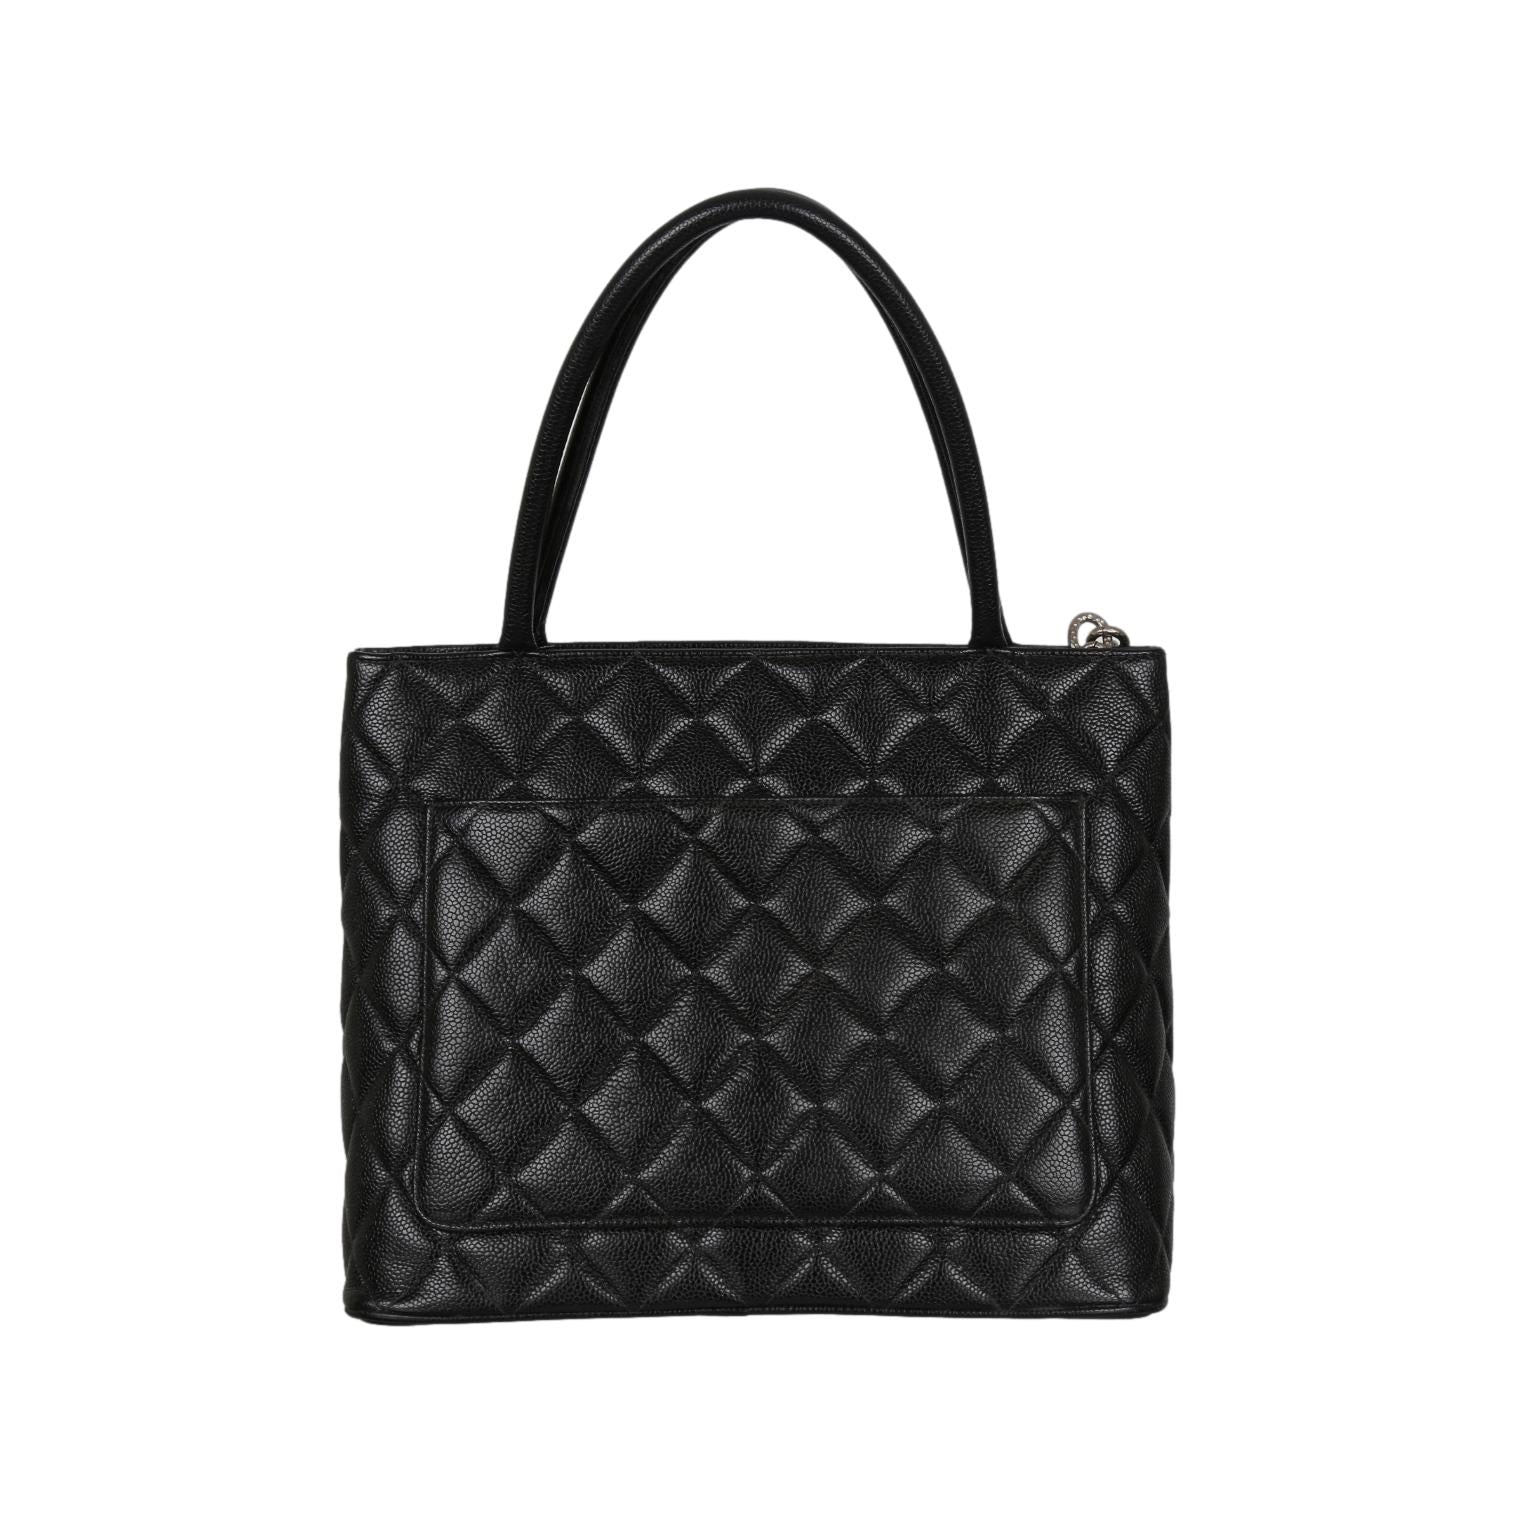 Chanel Black Caviar Medallion Bag - Handbags